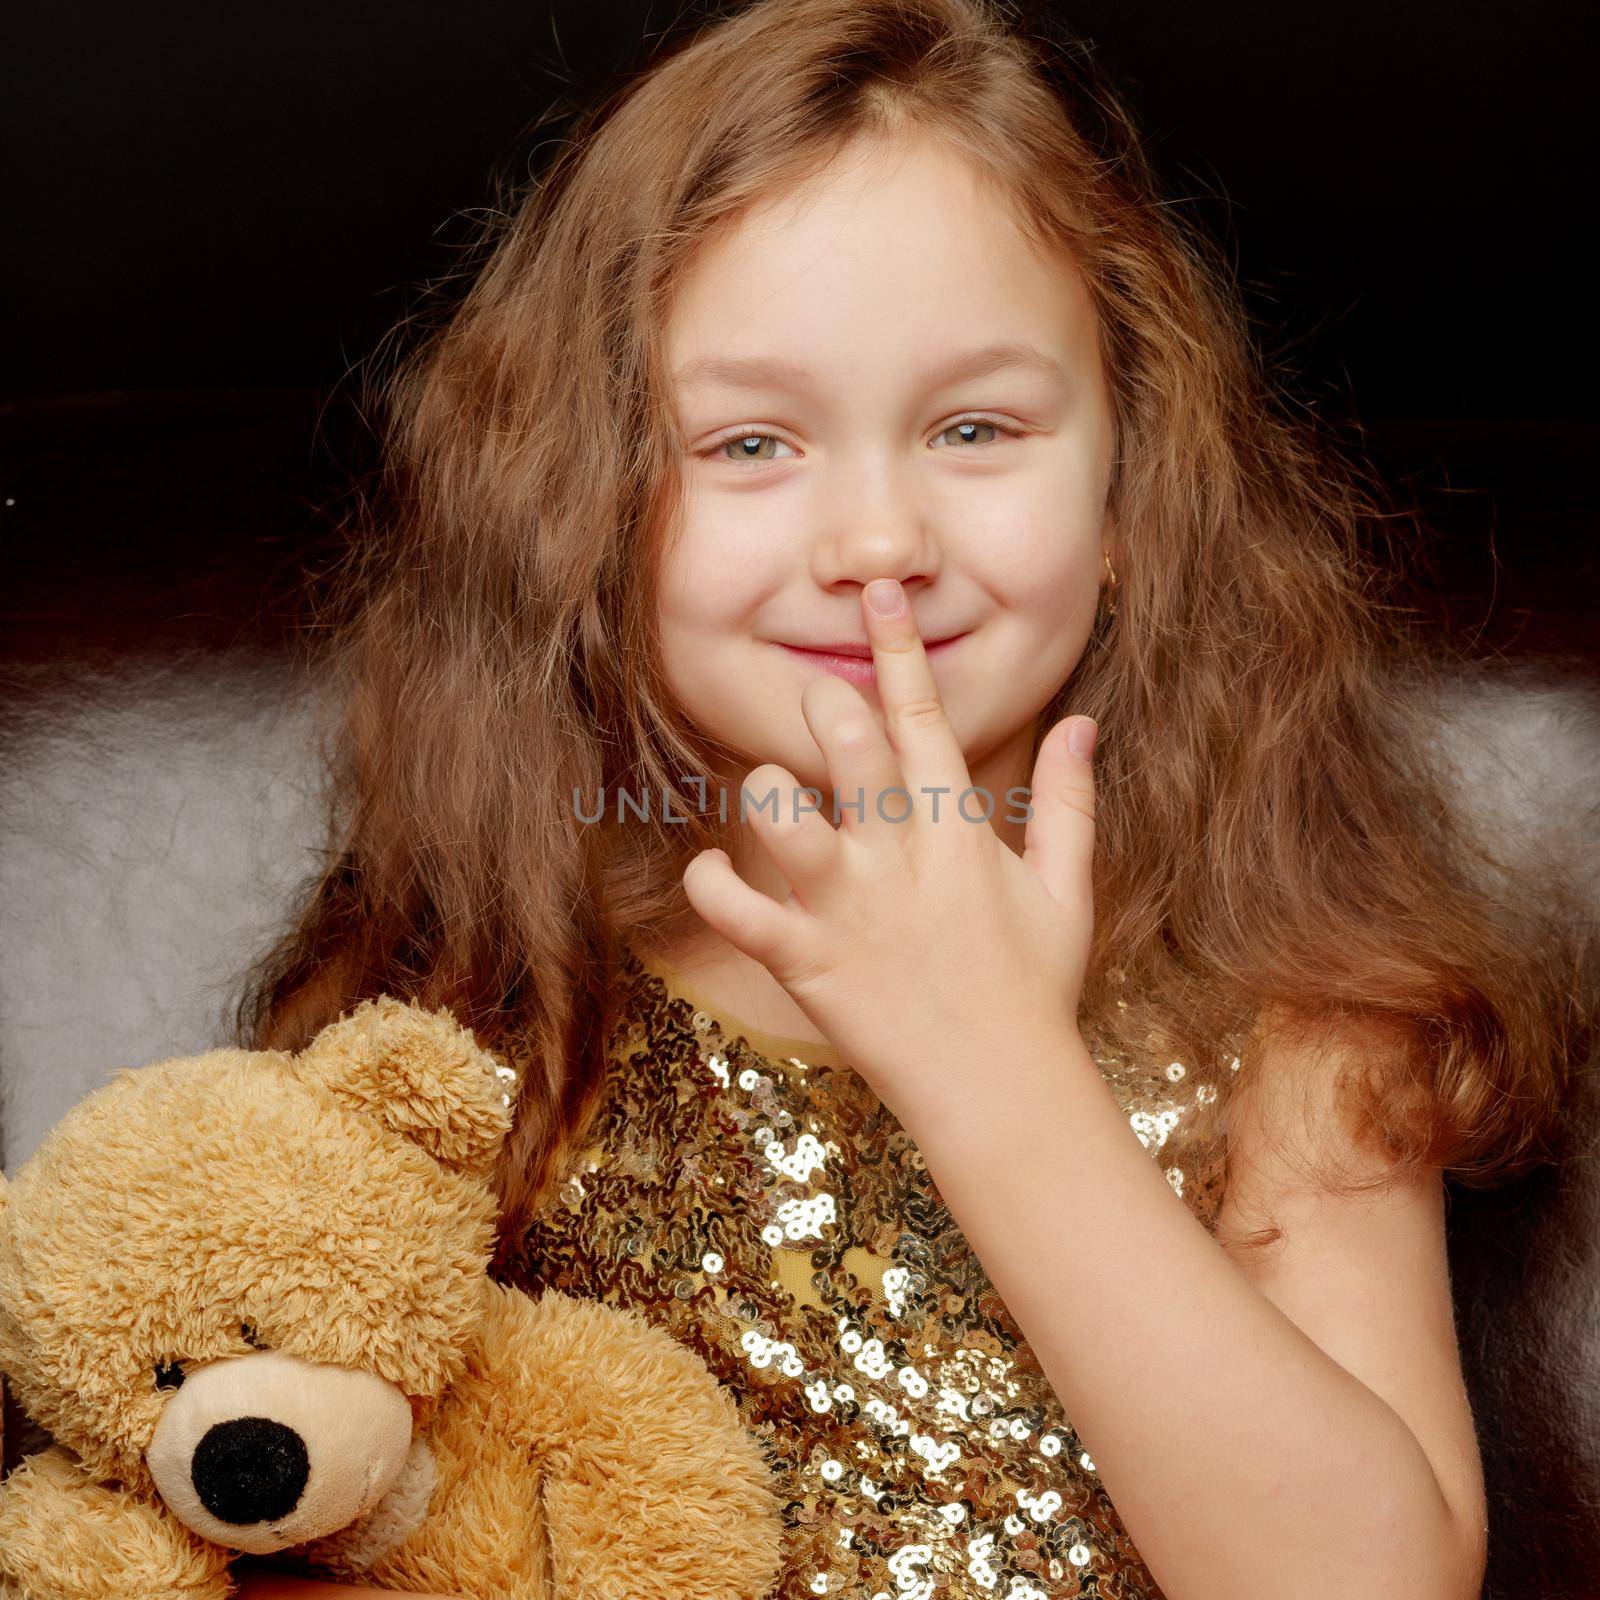 Little girl with a teddy bear on a black background. by kolesnikov_studio